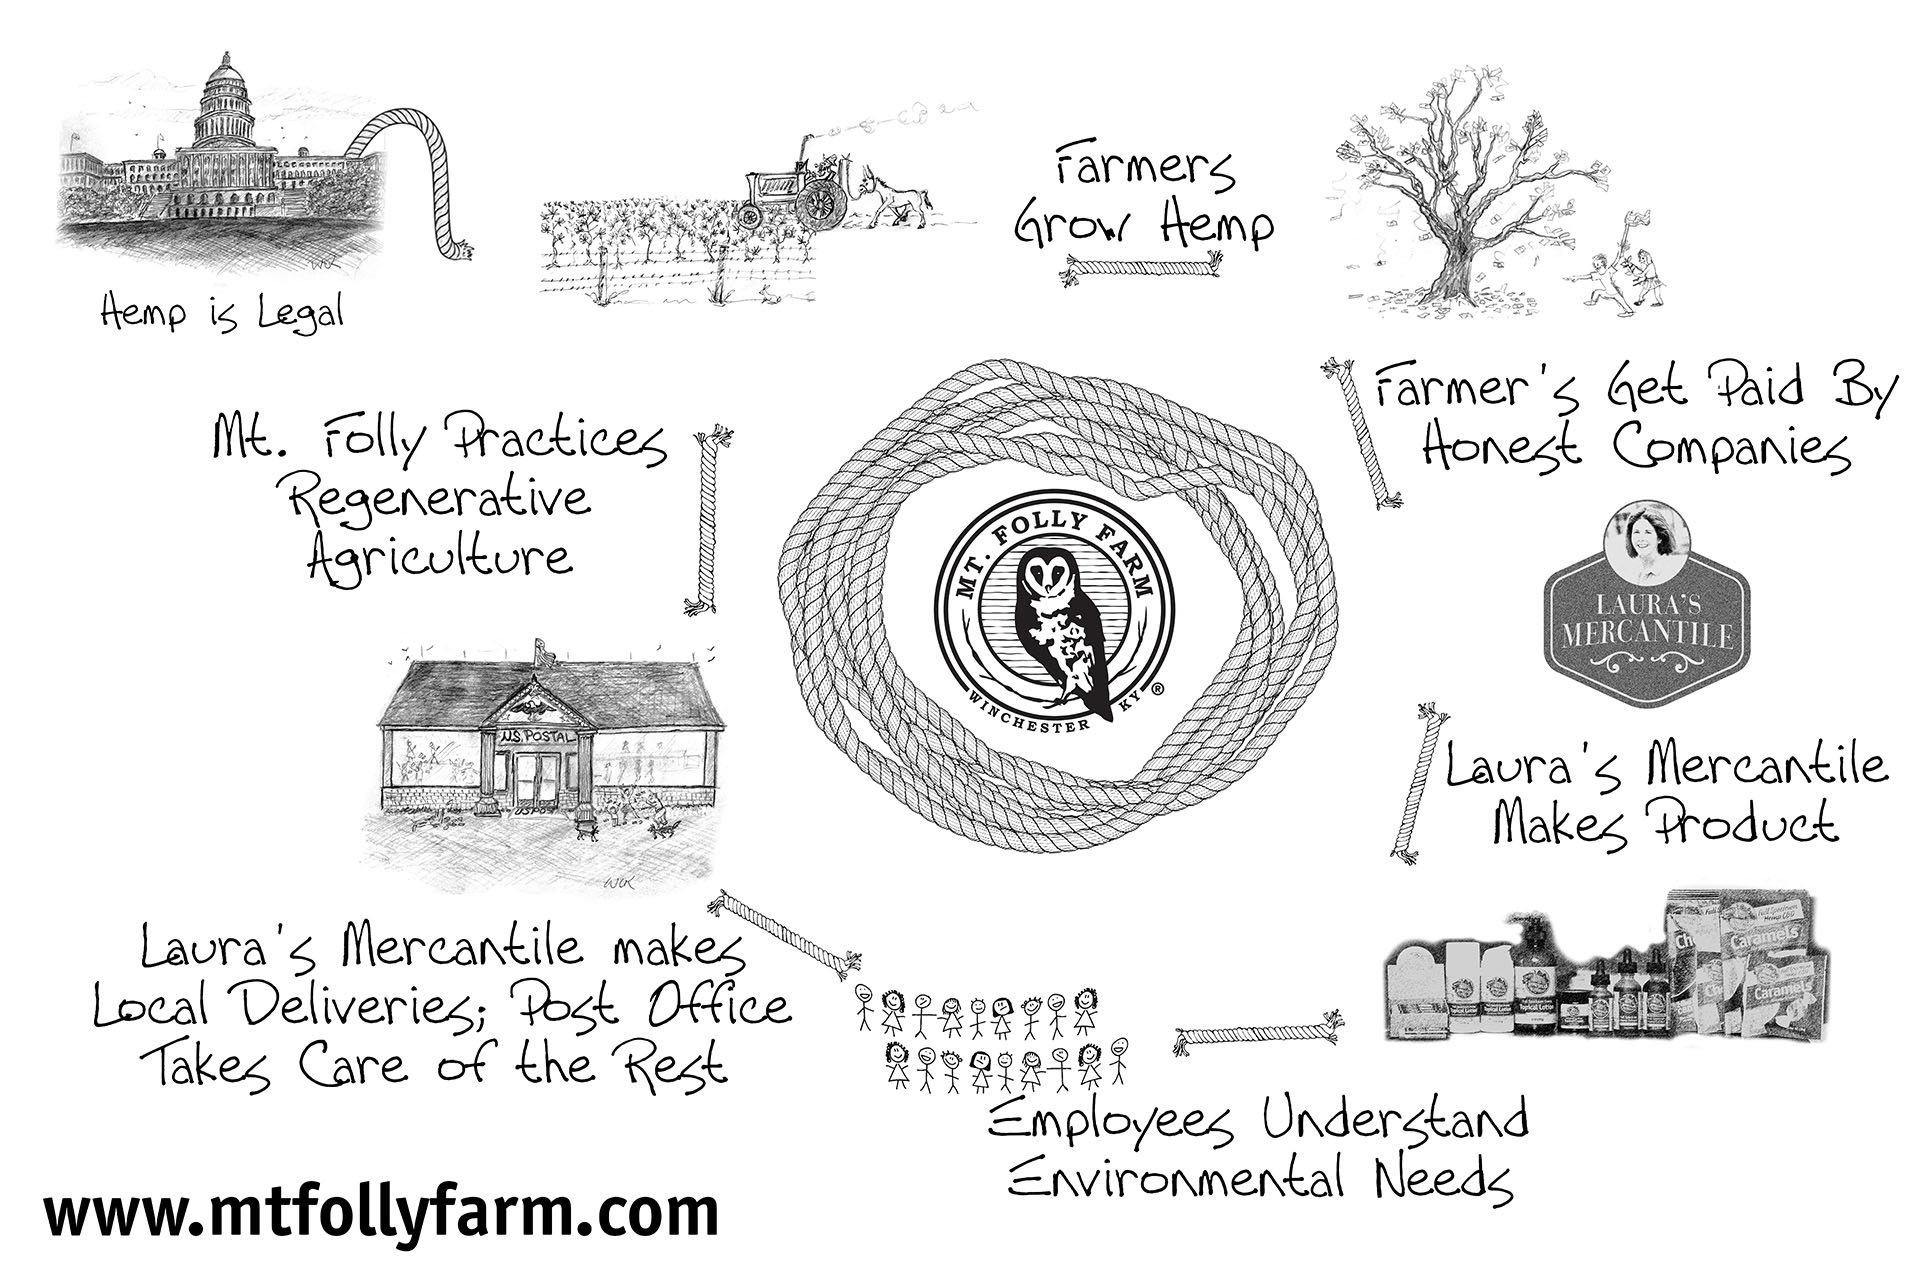 Laura Freeman's regenerative agriculture system at Mt. Folly Farm.